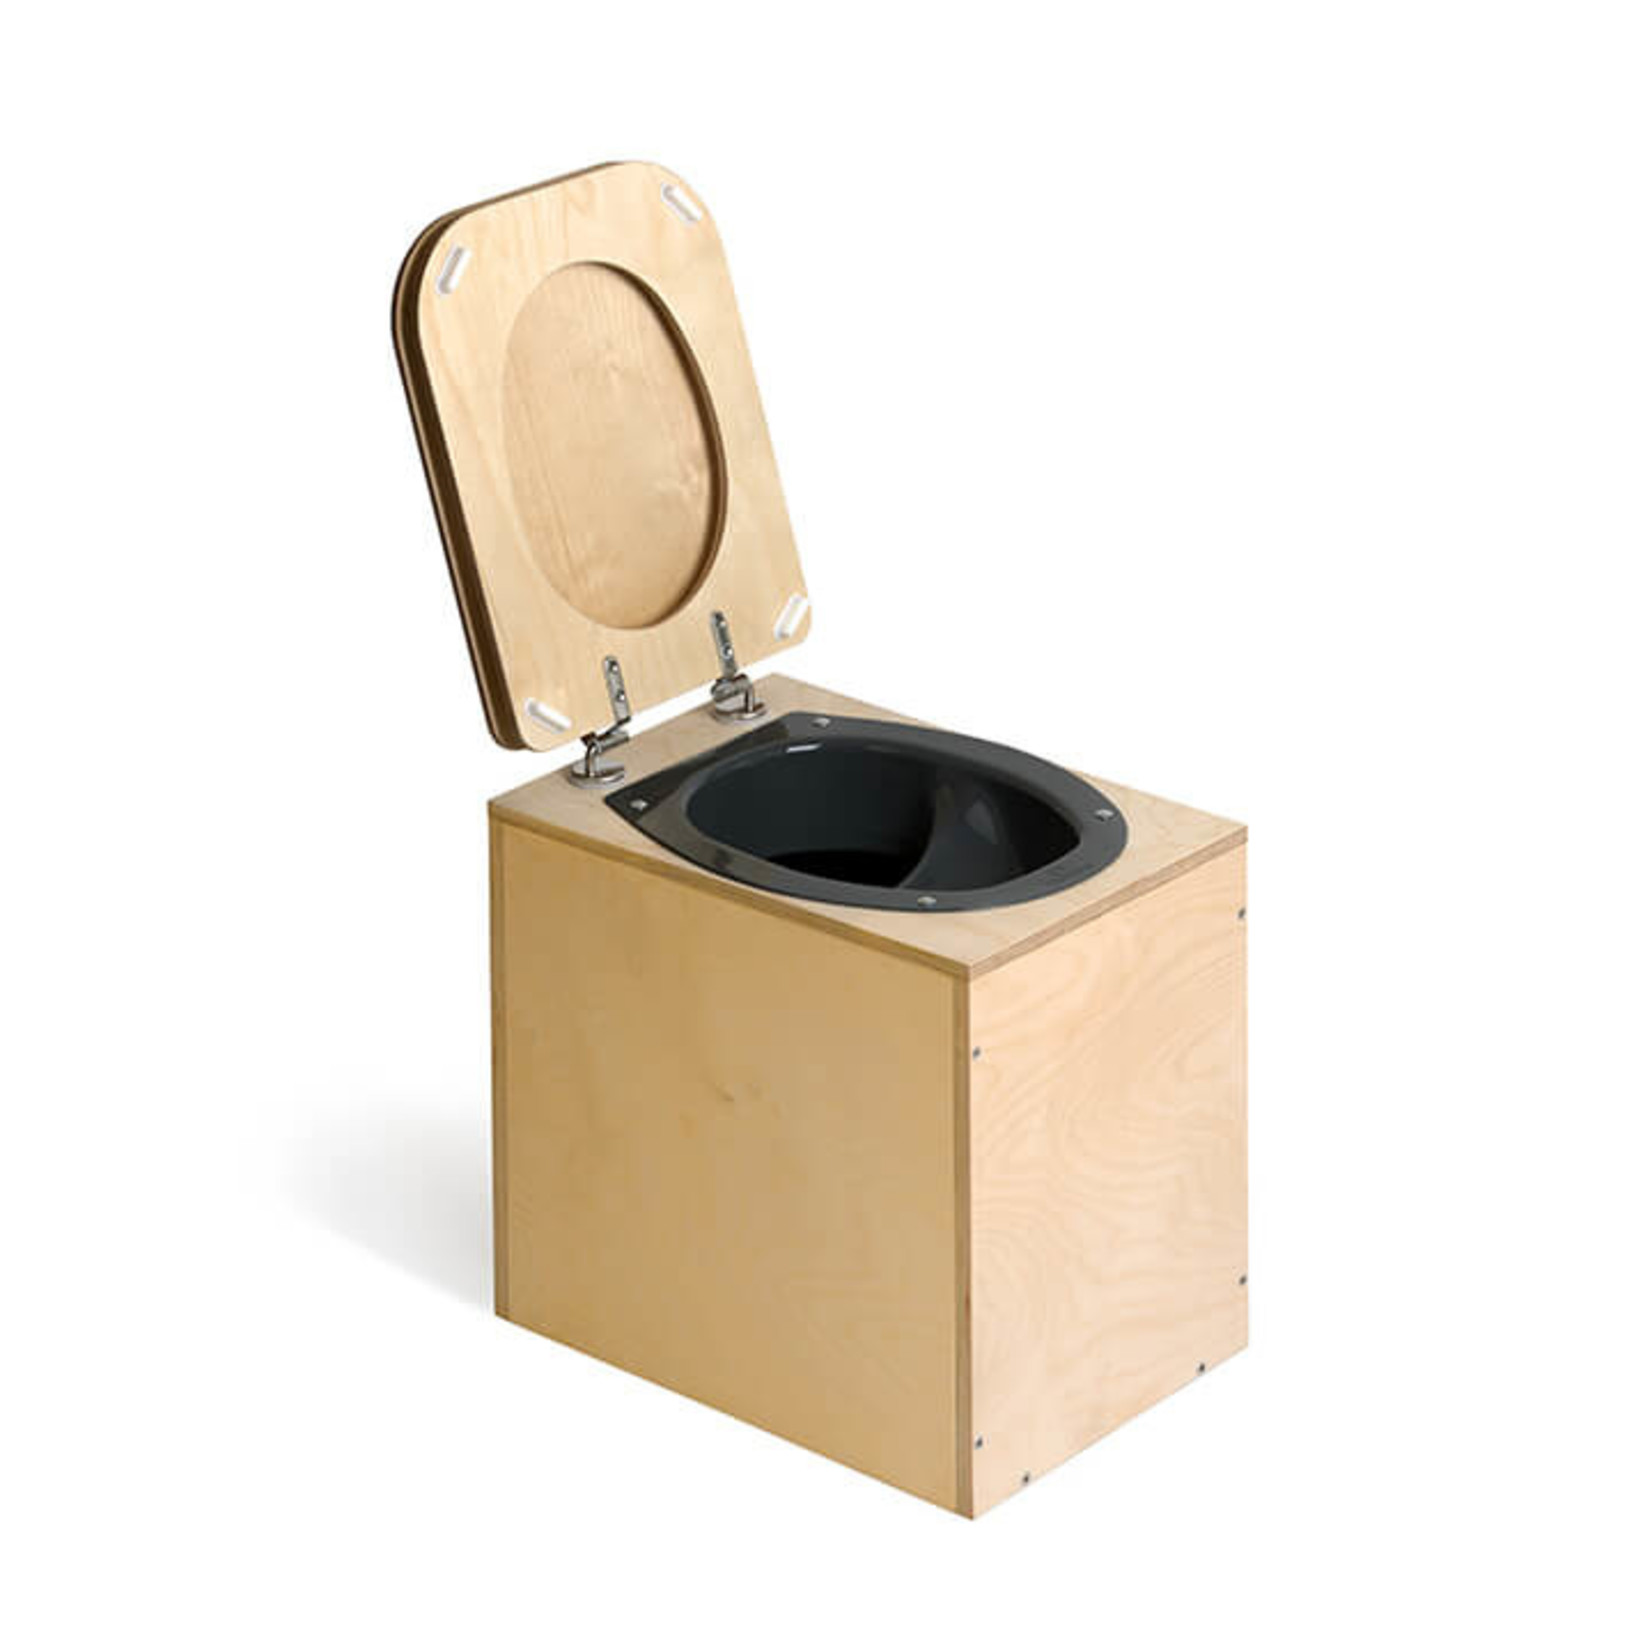 Camper toilet compost/ droogtoilet van Trobolo